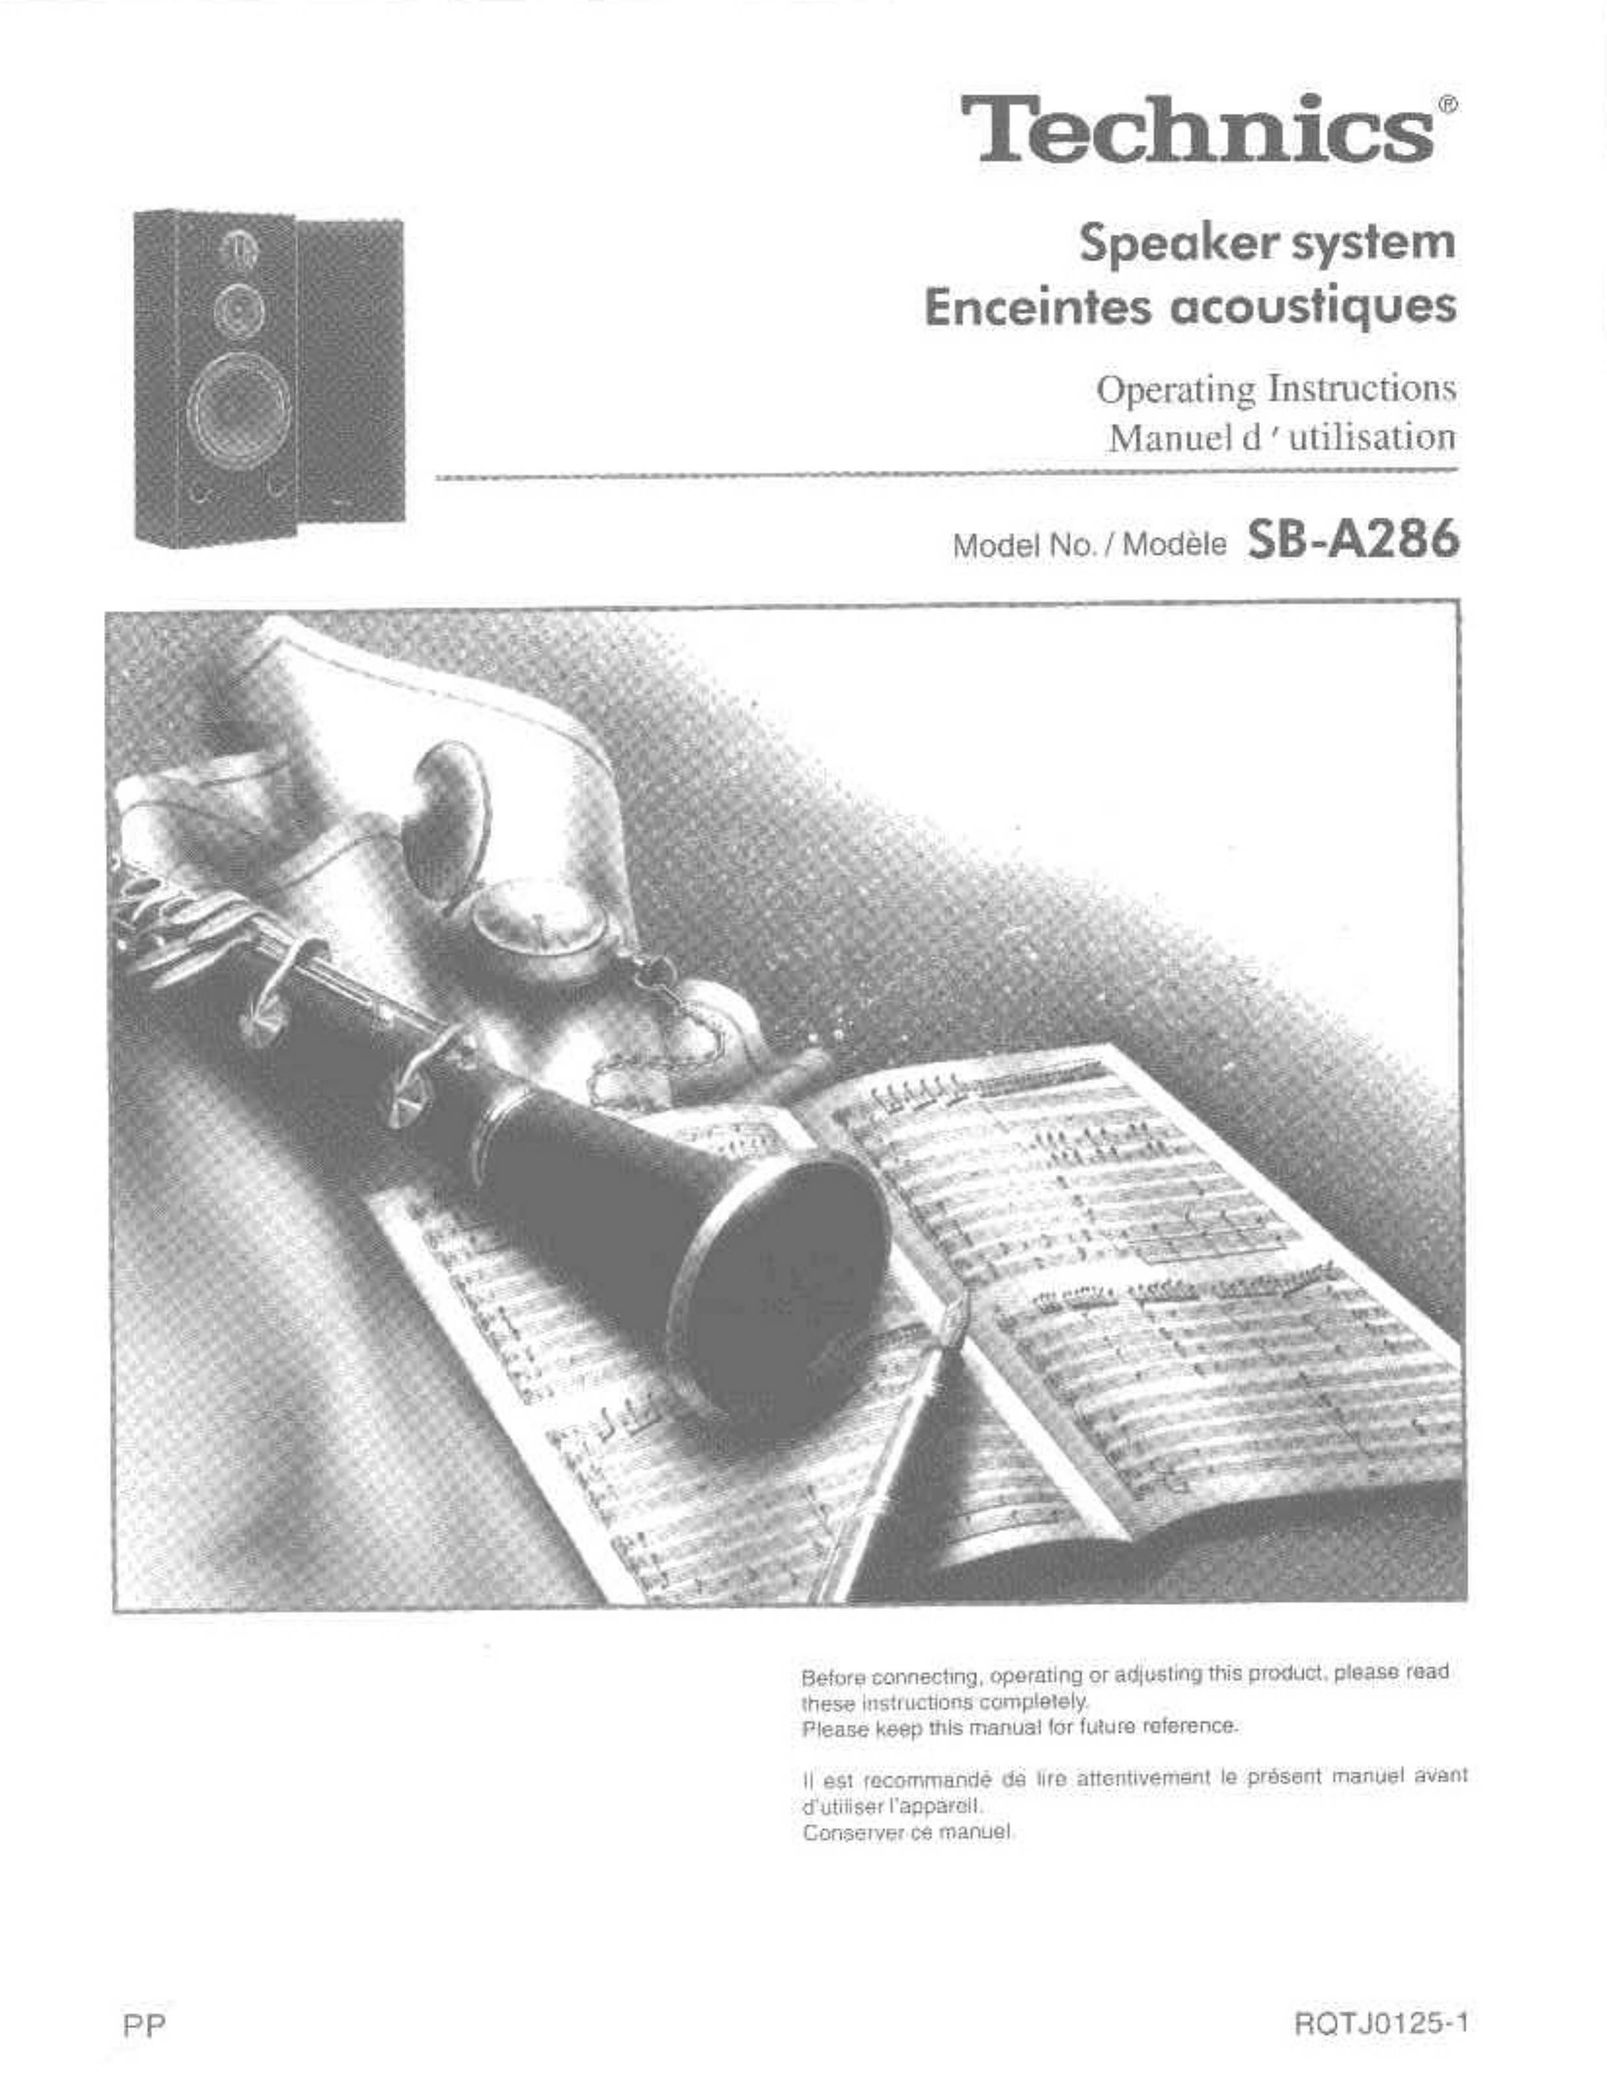 Panasonic SB-A286 Speaker System User Manual